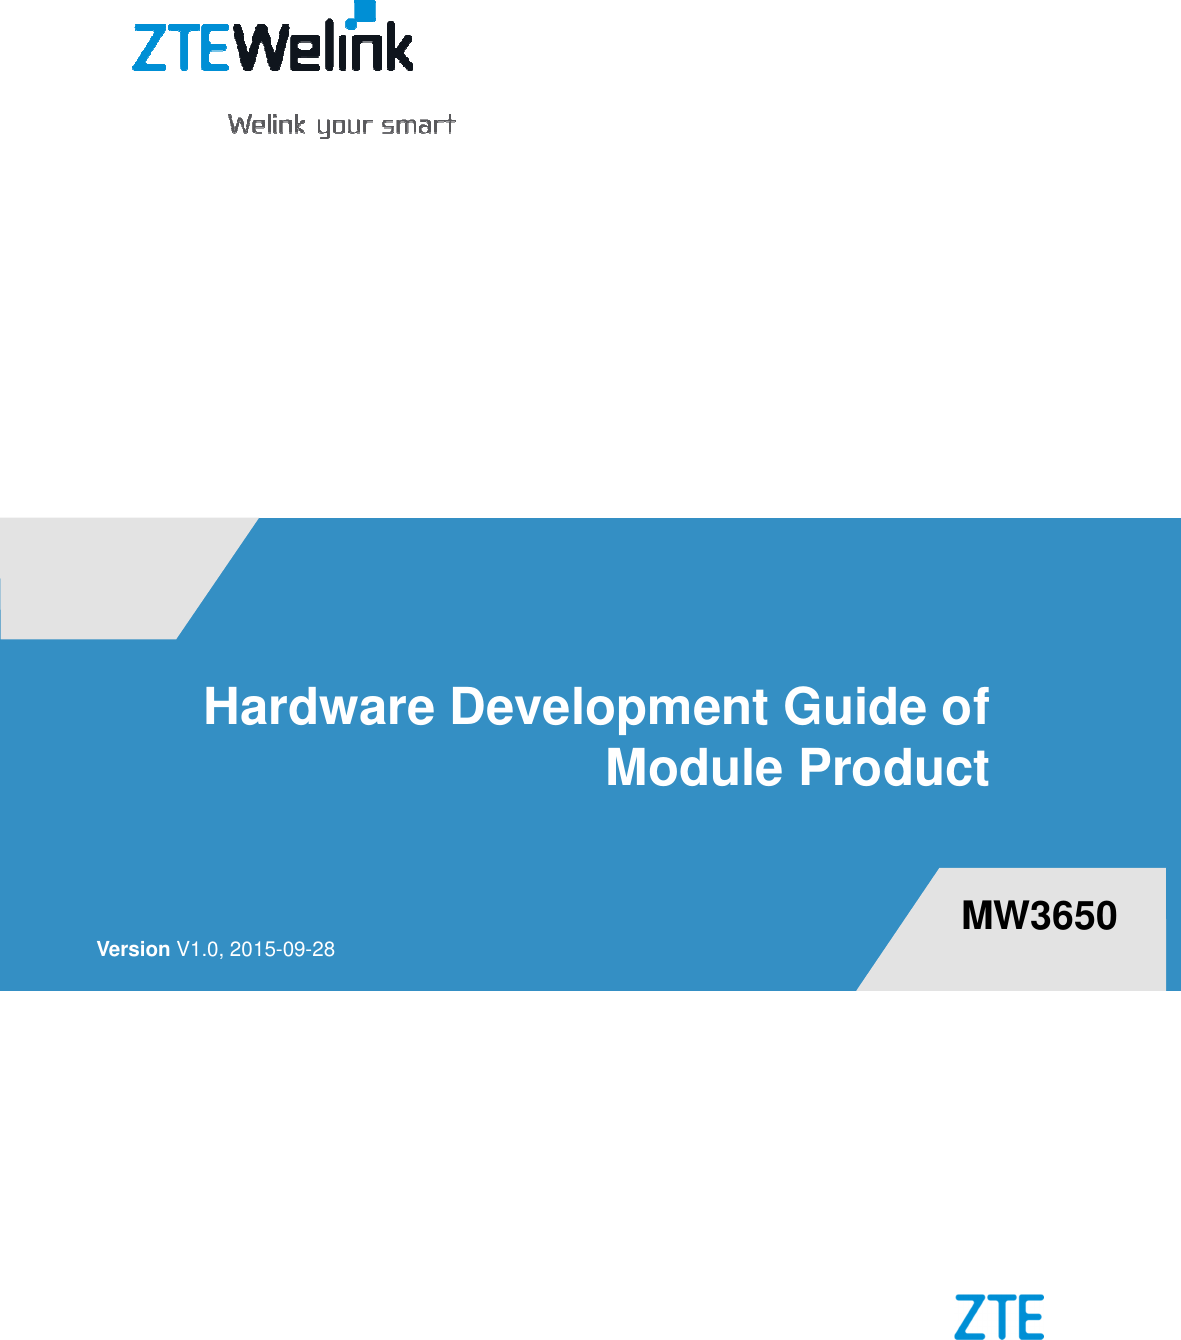                            Hardware Development Guide of Module Product   Version V1.0, 2015-09-28  MW3650 